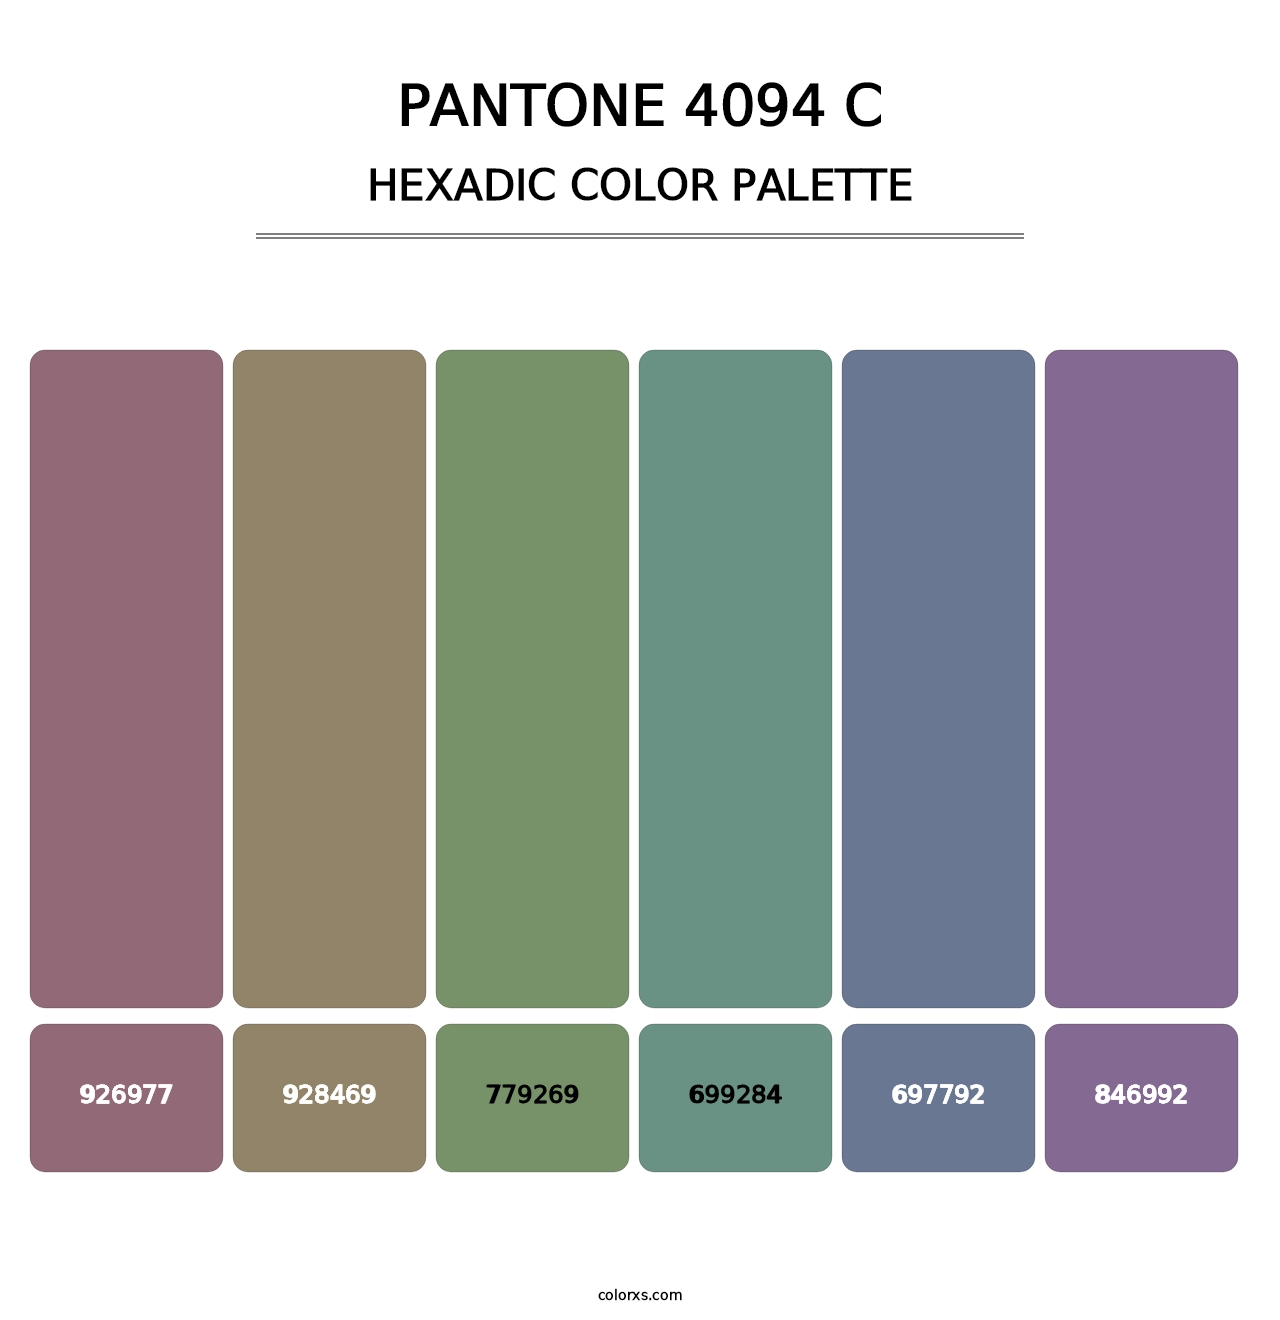 PANTONE 4094 C - Hexadic Color Palette